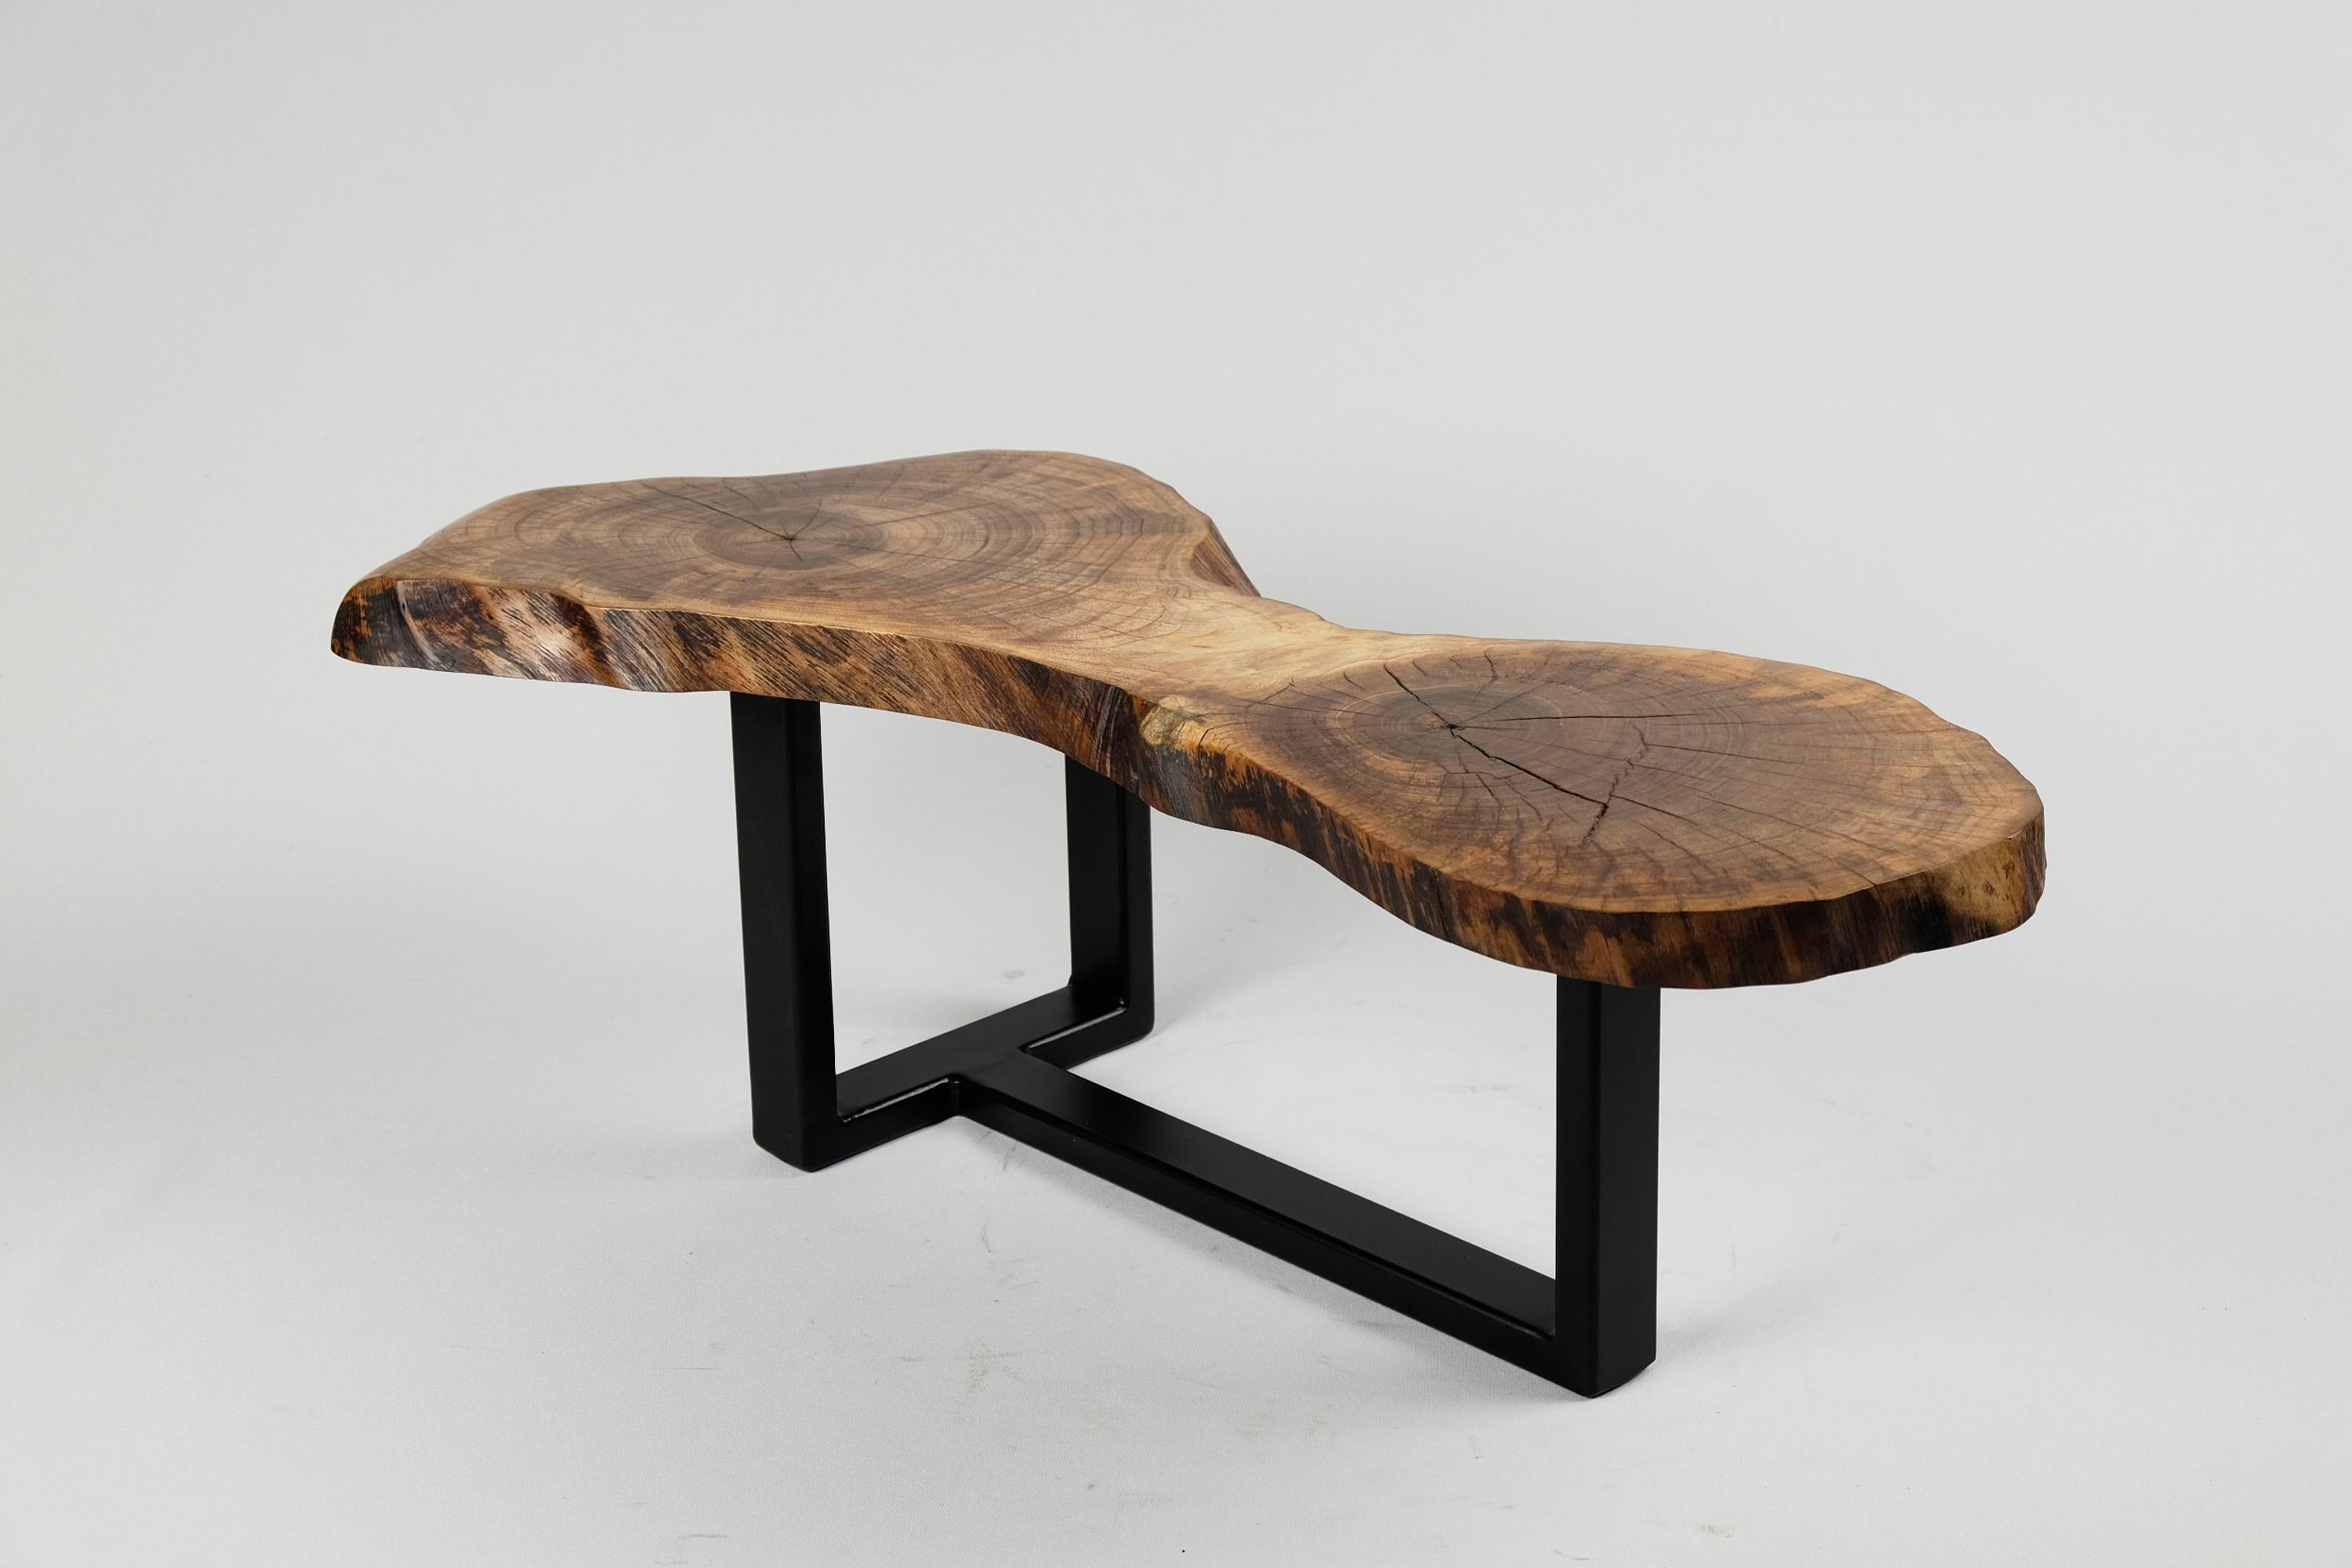 Original Contemporary Design, Burnt Oak with Steel, Unique Side Table, Logniture 4